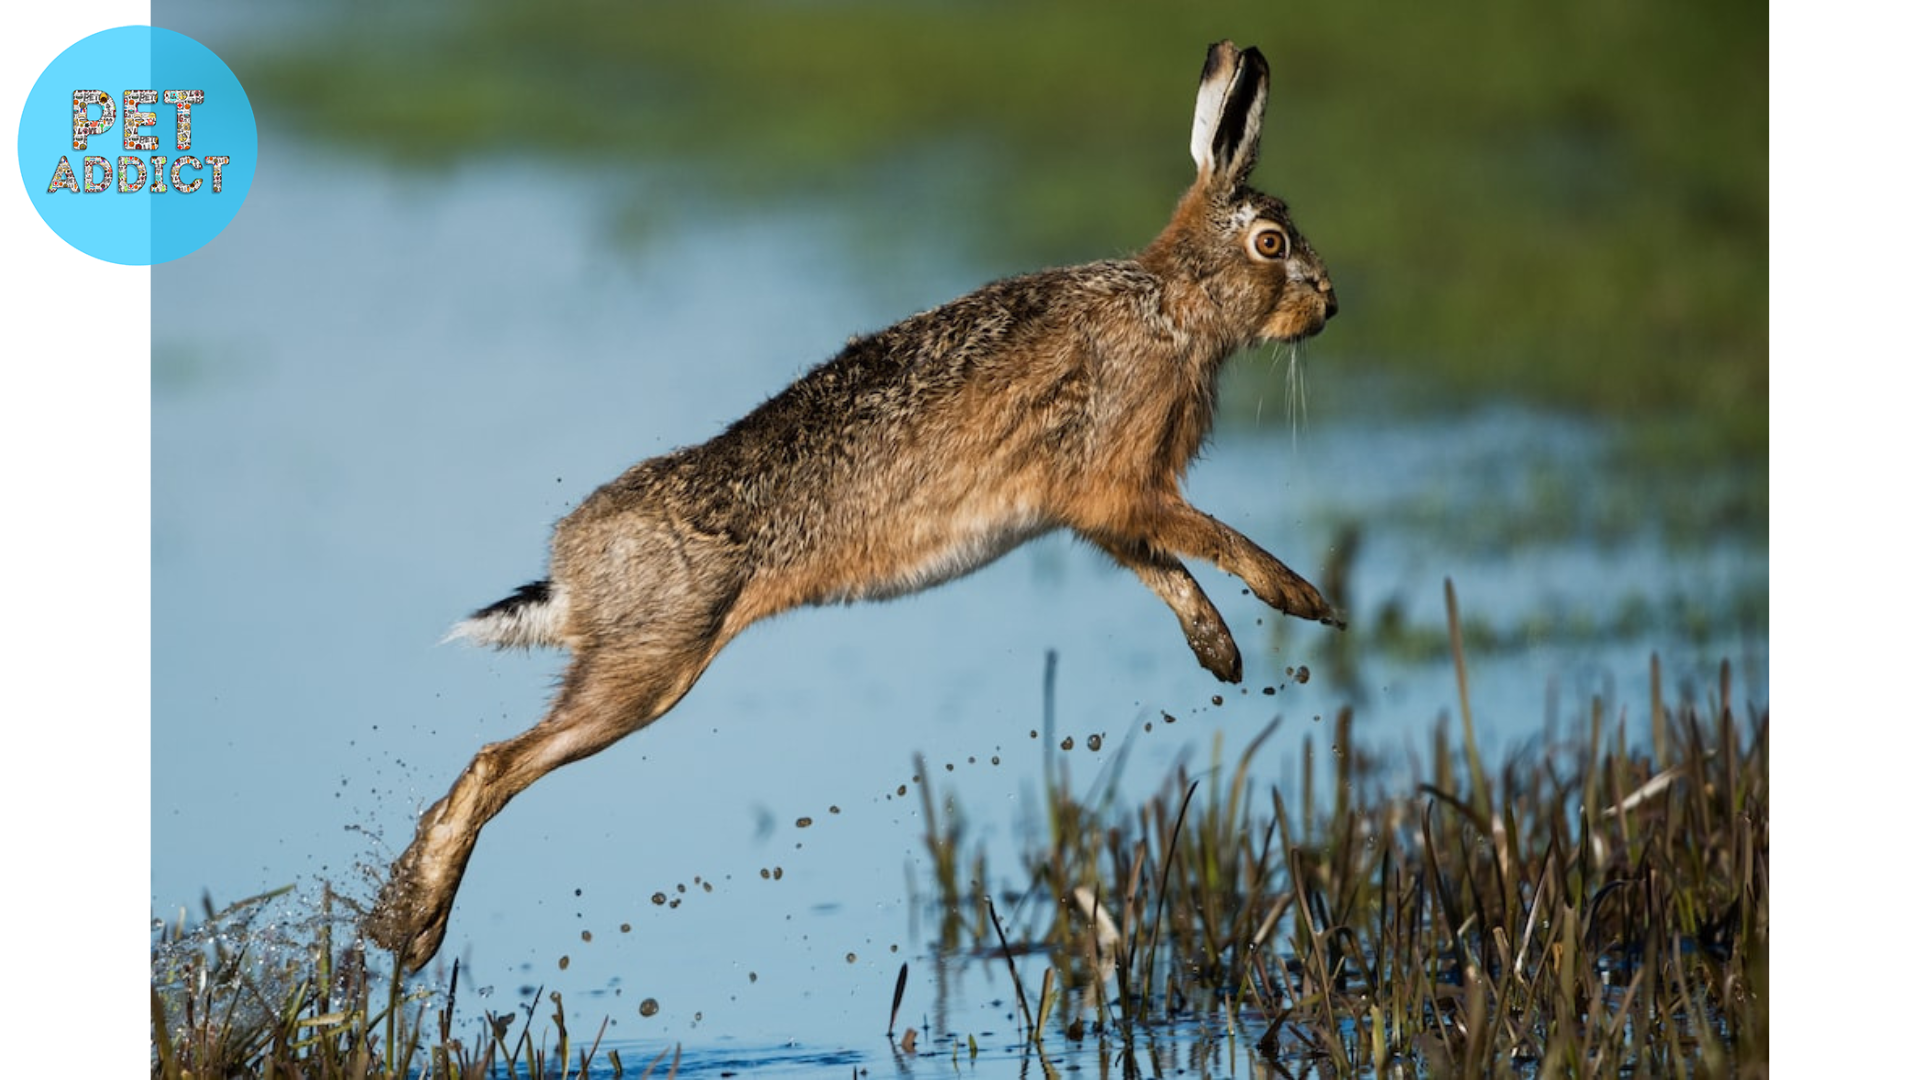 hare vs rabbit